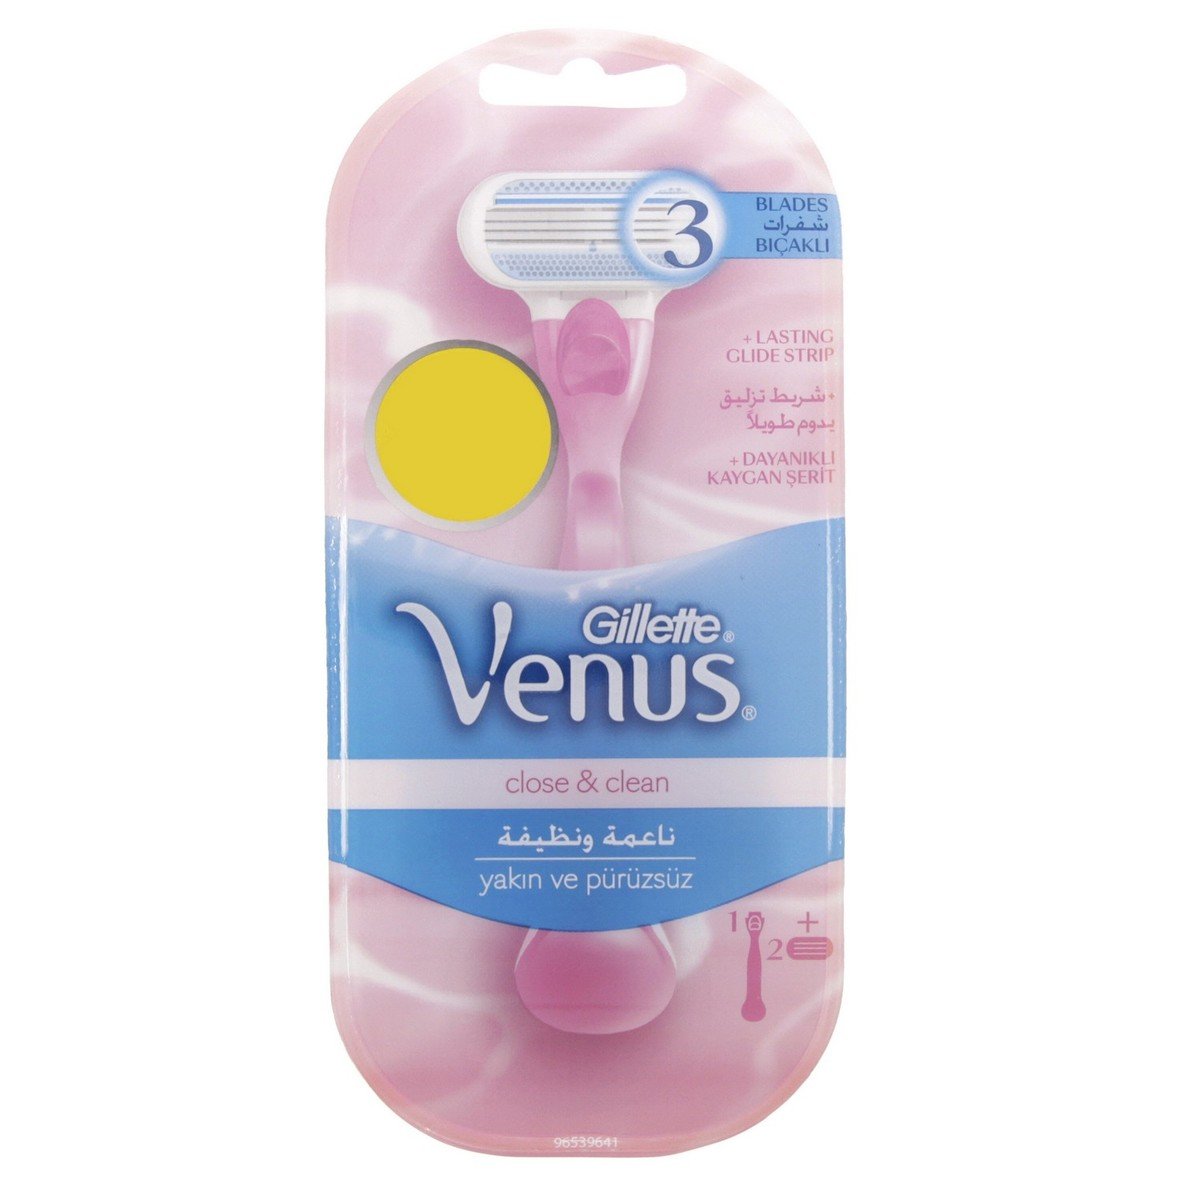 Gillette Venus Close & Clean Razor 2up 1 pc